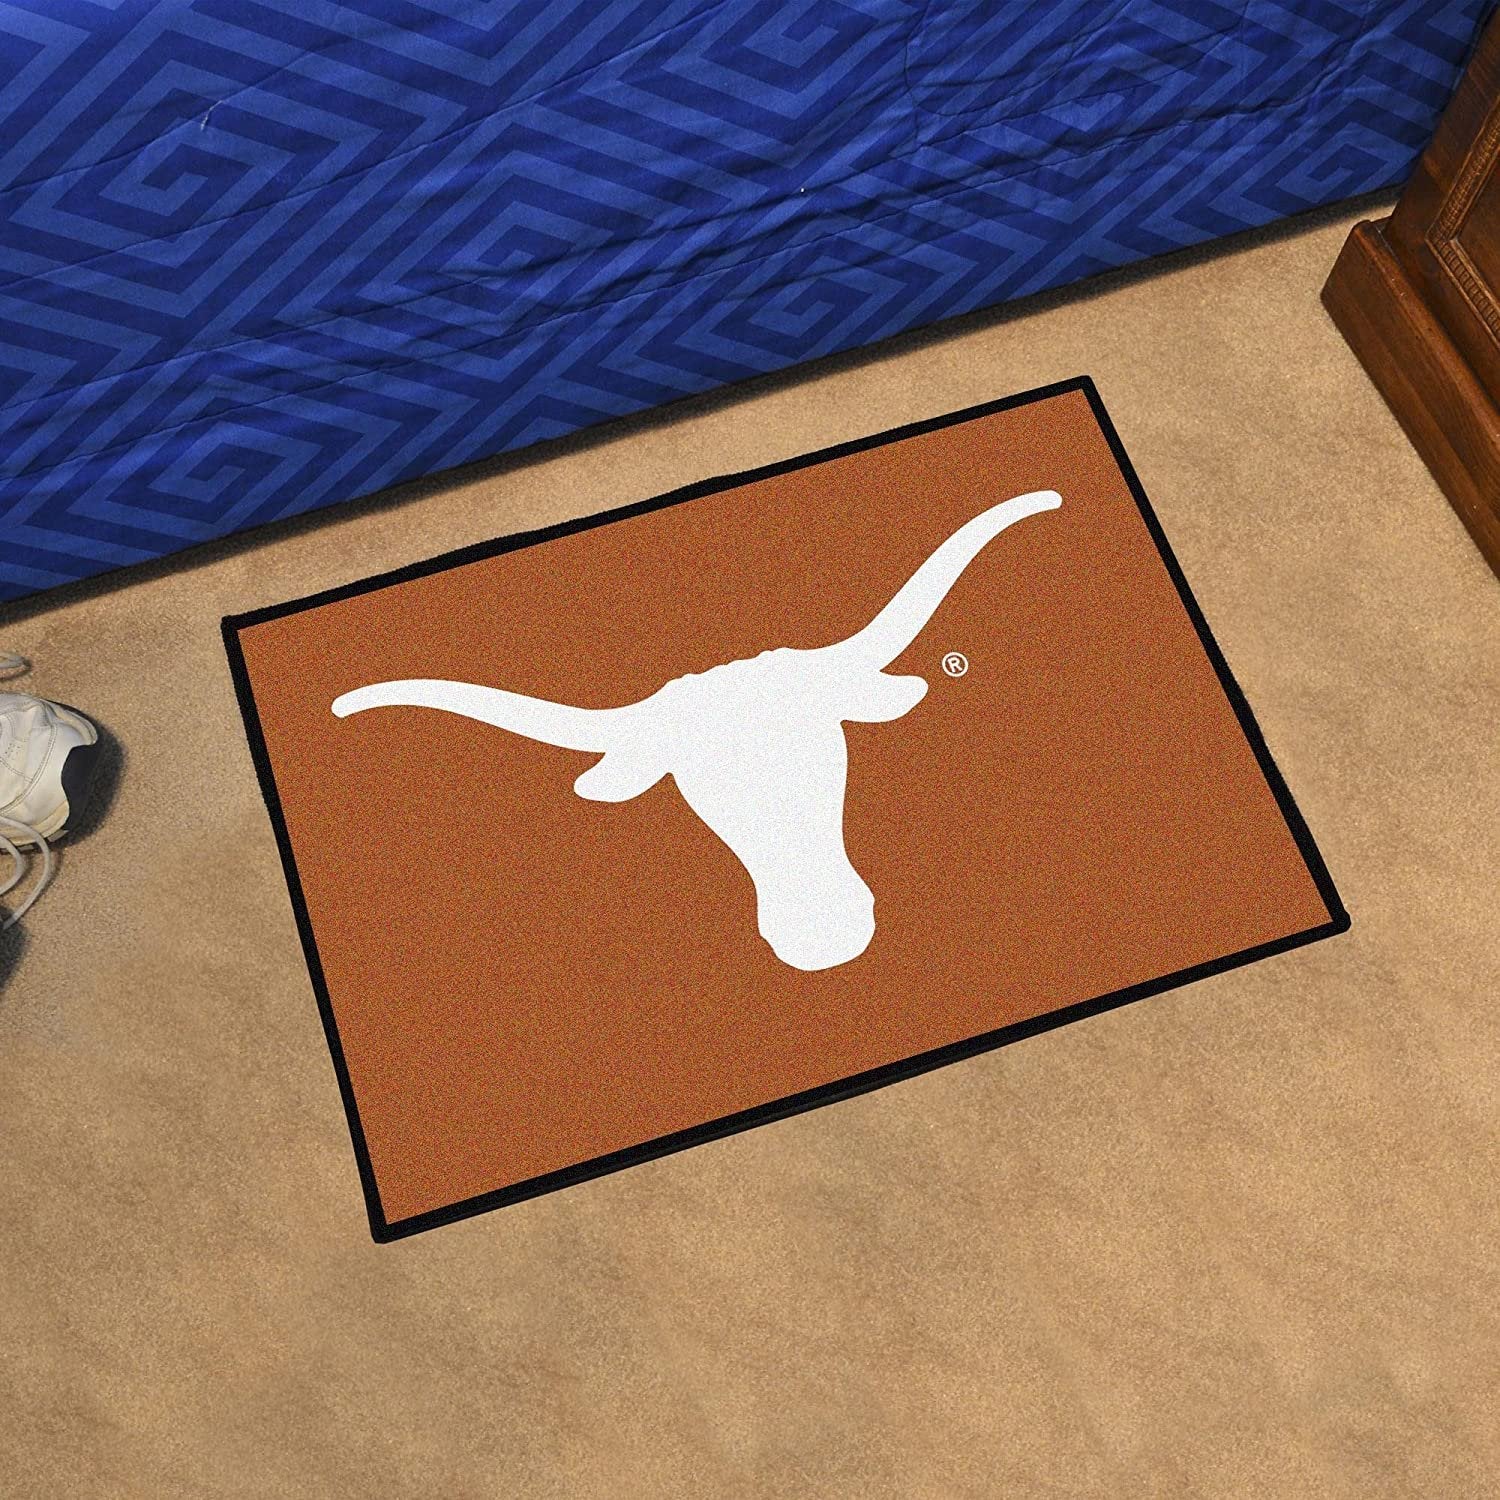 University of Texas Longhorns Floor Mat Area Rug, 20x30 Inch, Nylon, Anti-Skid Backing